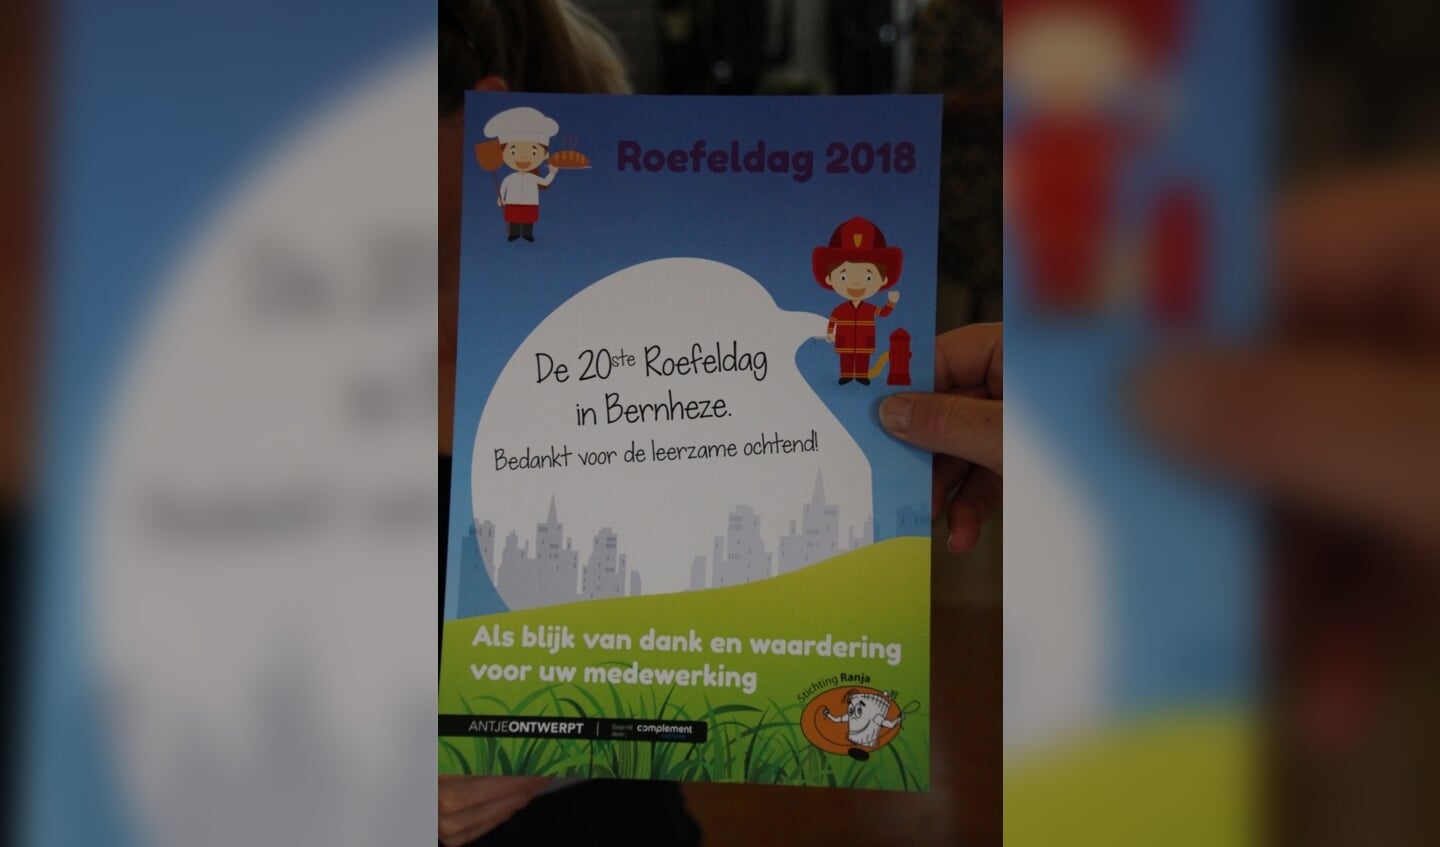 Nistelrode - Roefeldag 2018